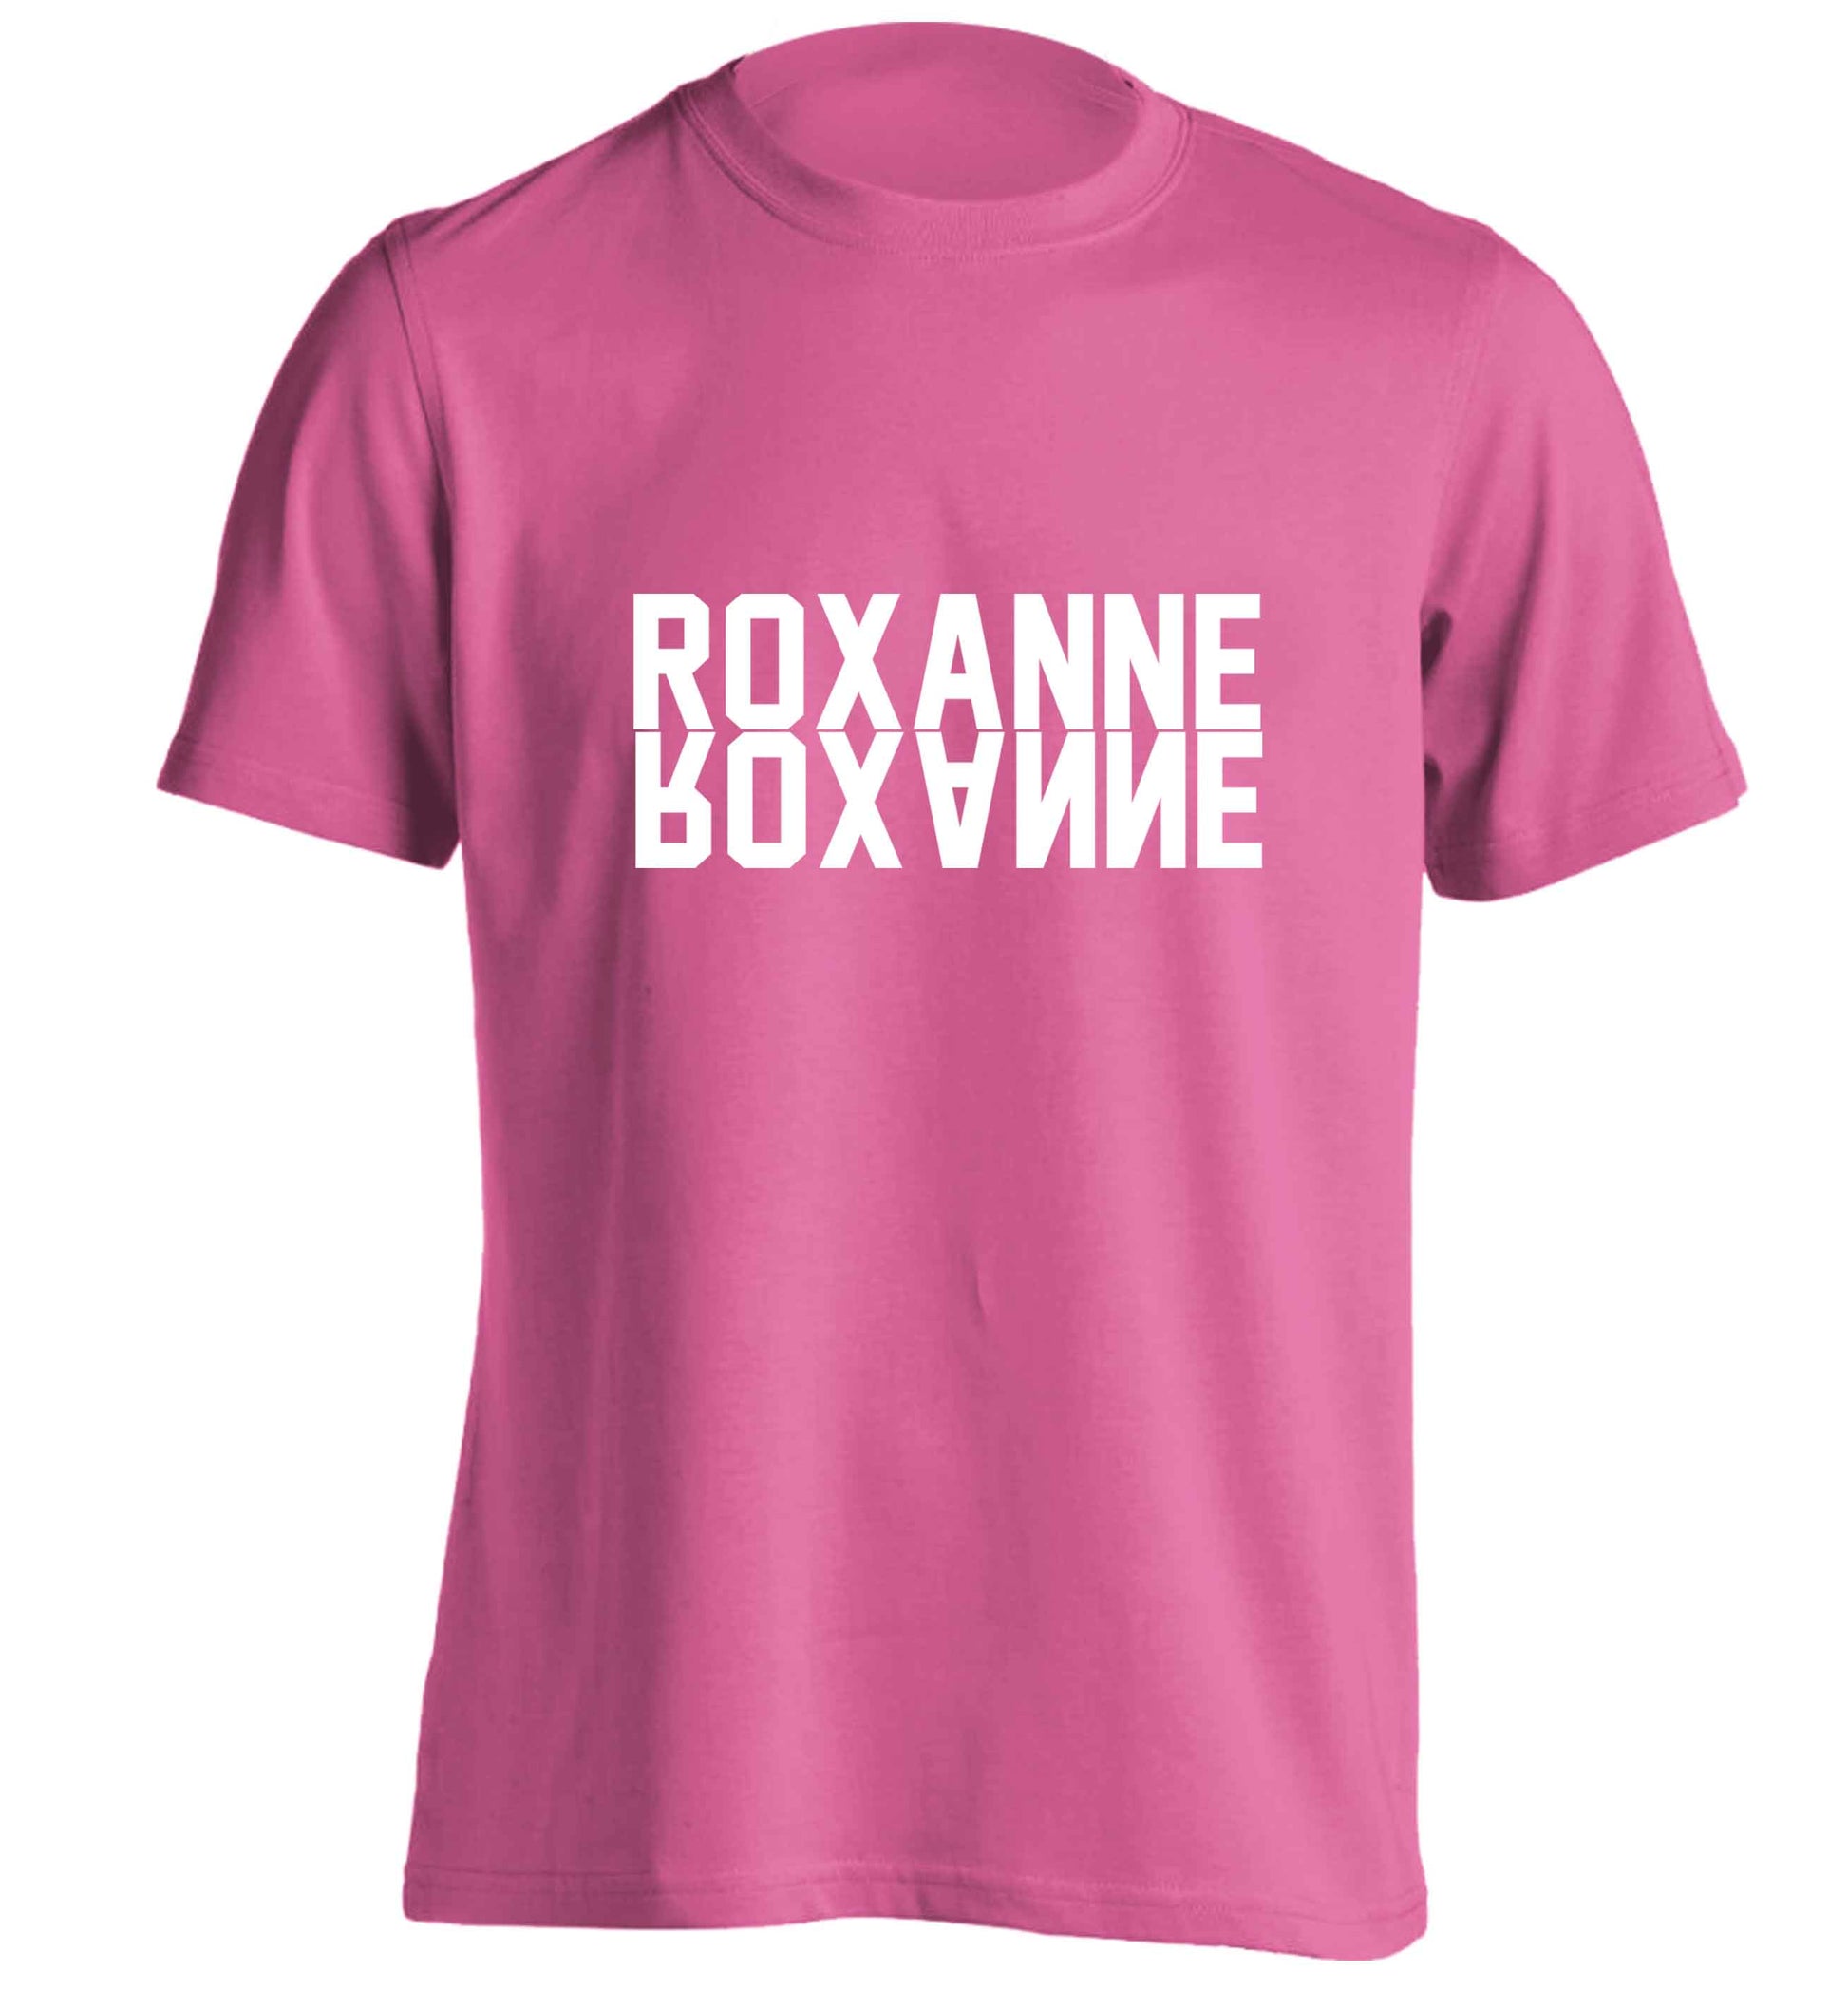 Misheard song lyrics - check!  adults unisex pink Tshirt 2XL